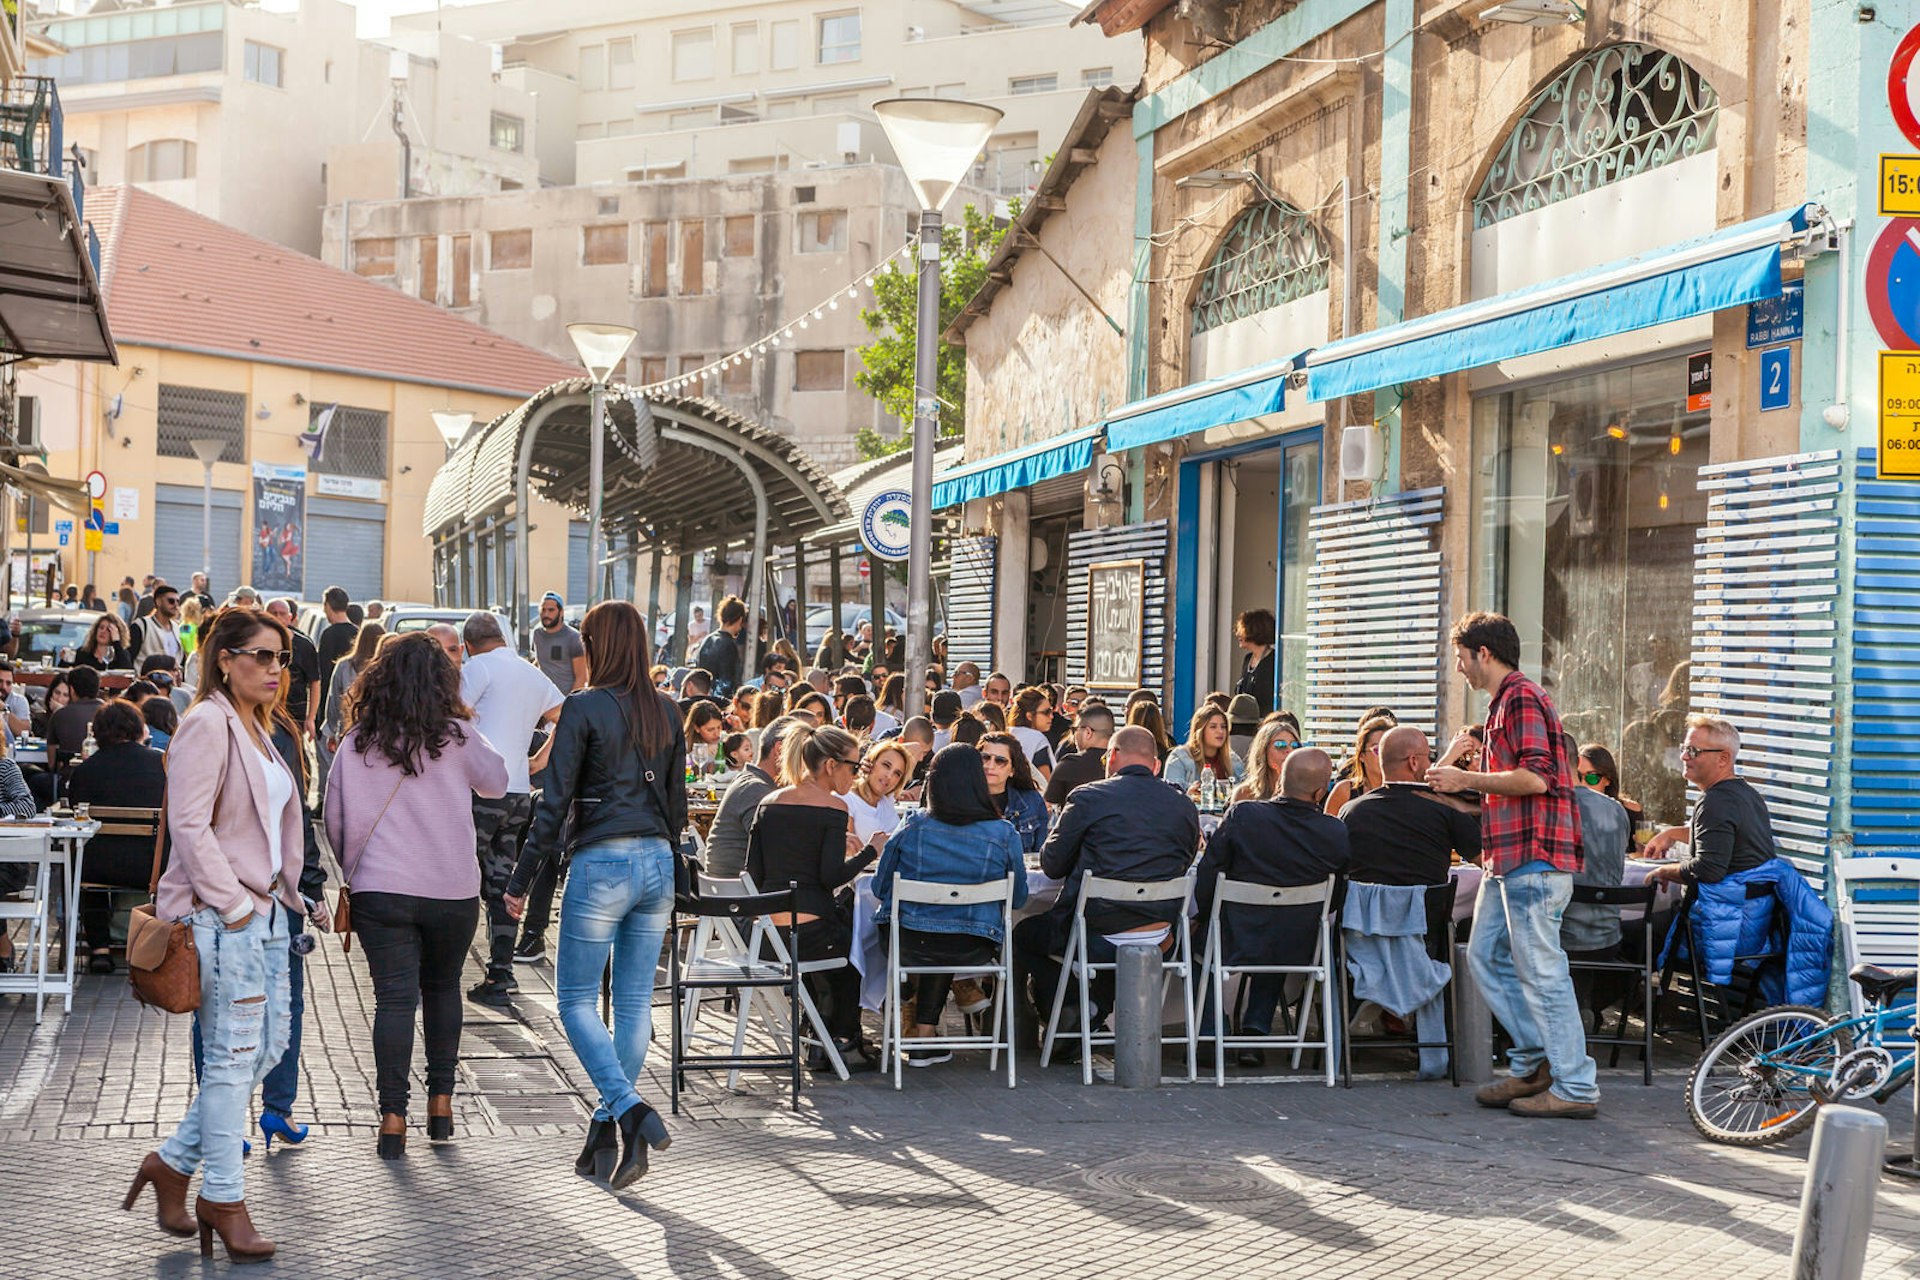 Bustling street cafe in the Arab quarter of Jaffa, Tel Aviv. Image by Kvitka Fabian / Shutterstock